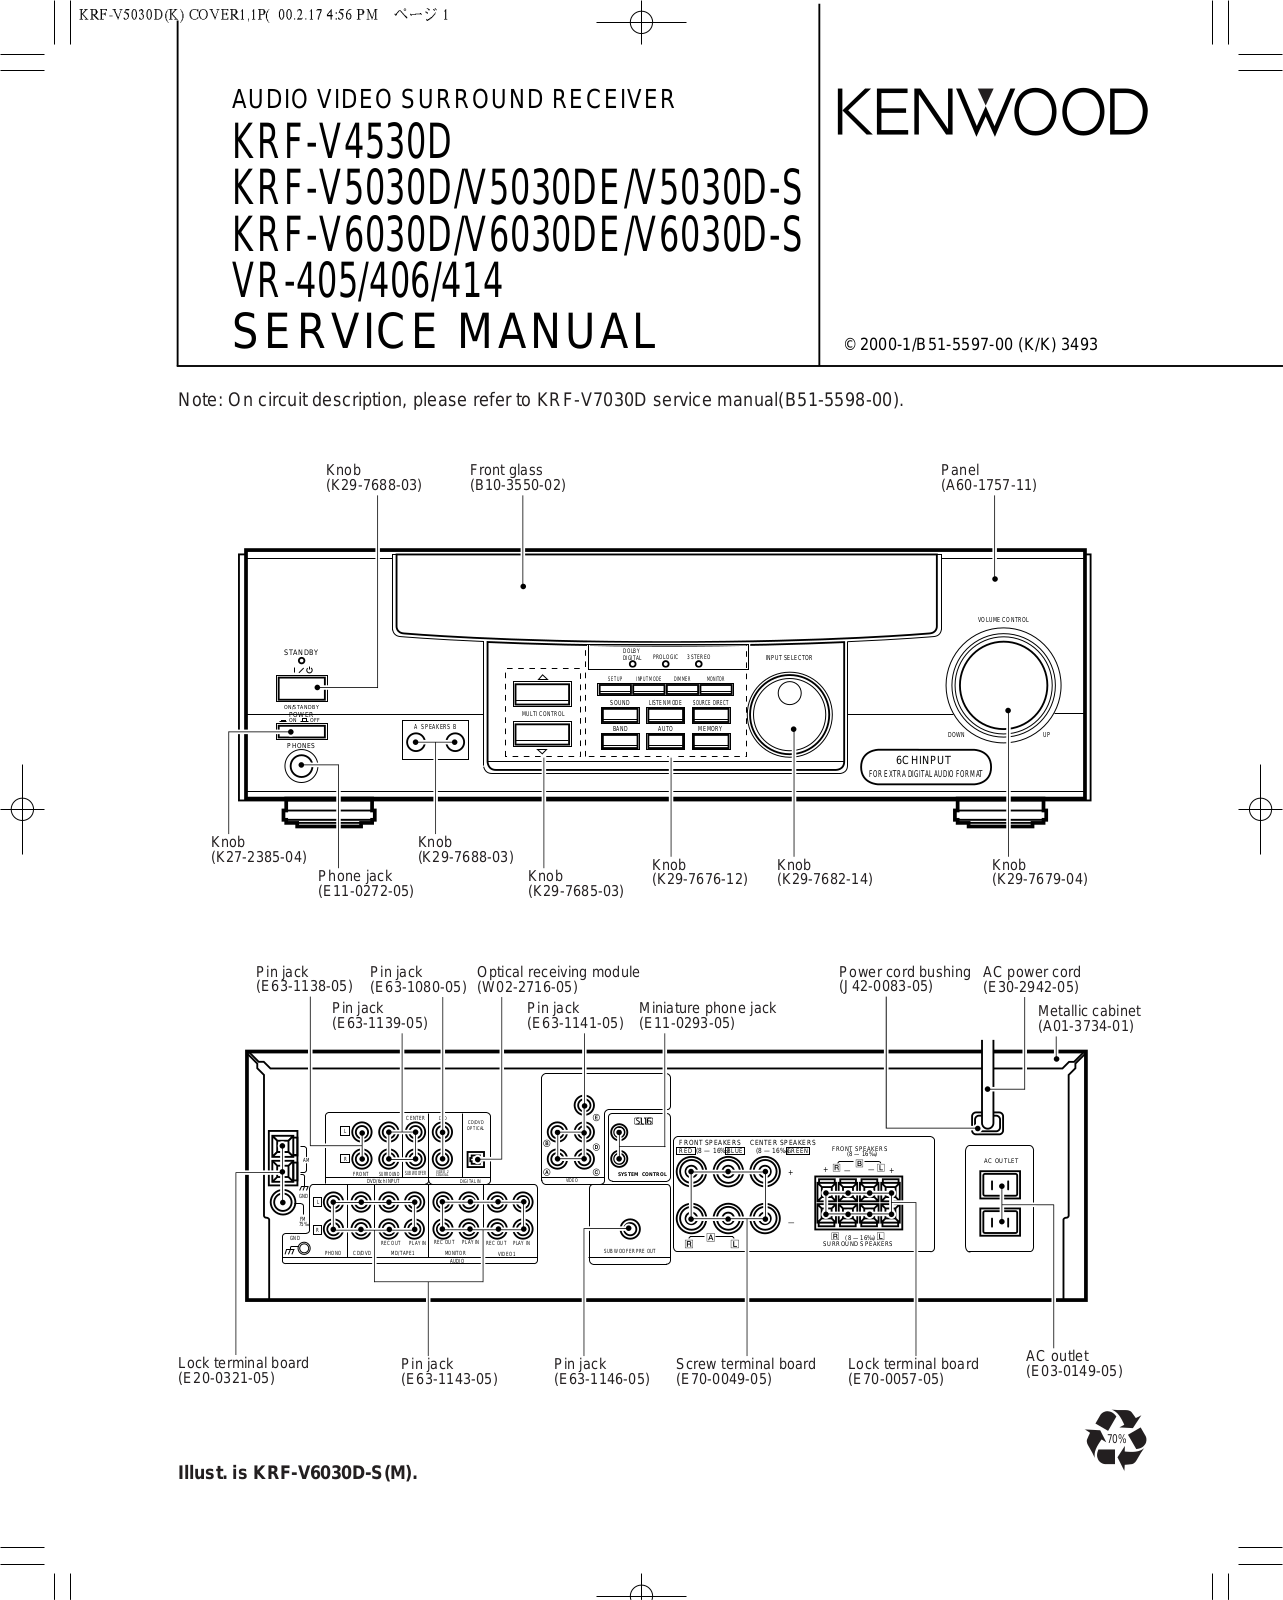 Kenwood VR-405 Service manual